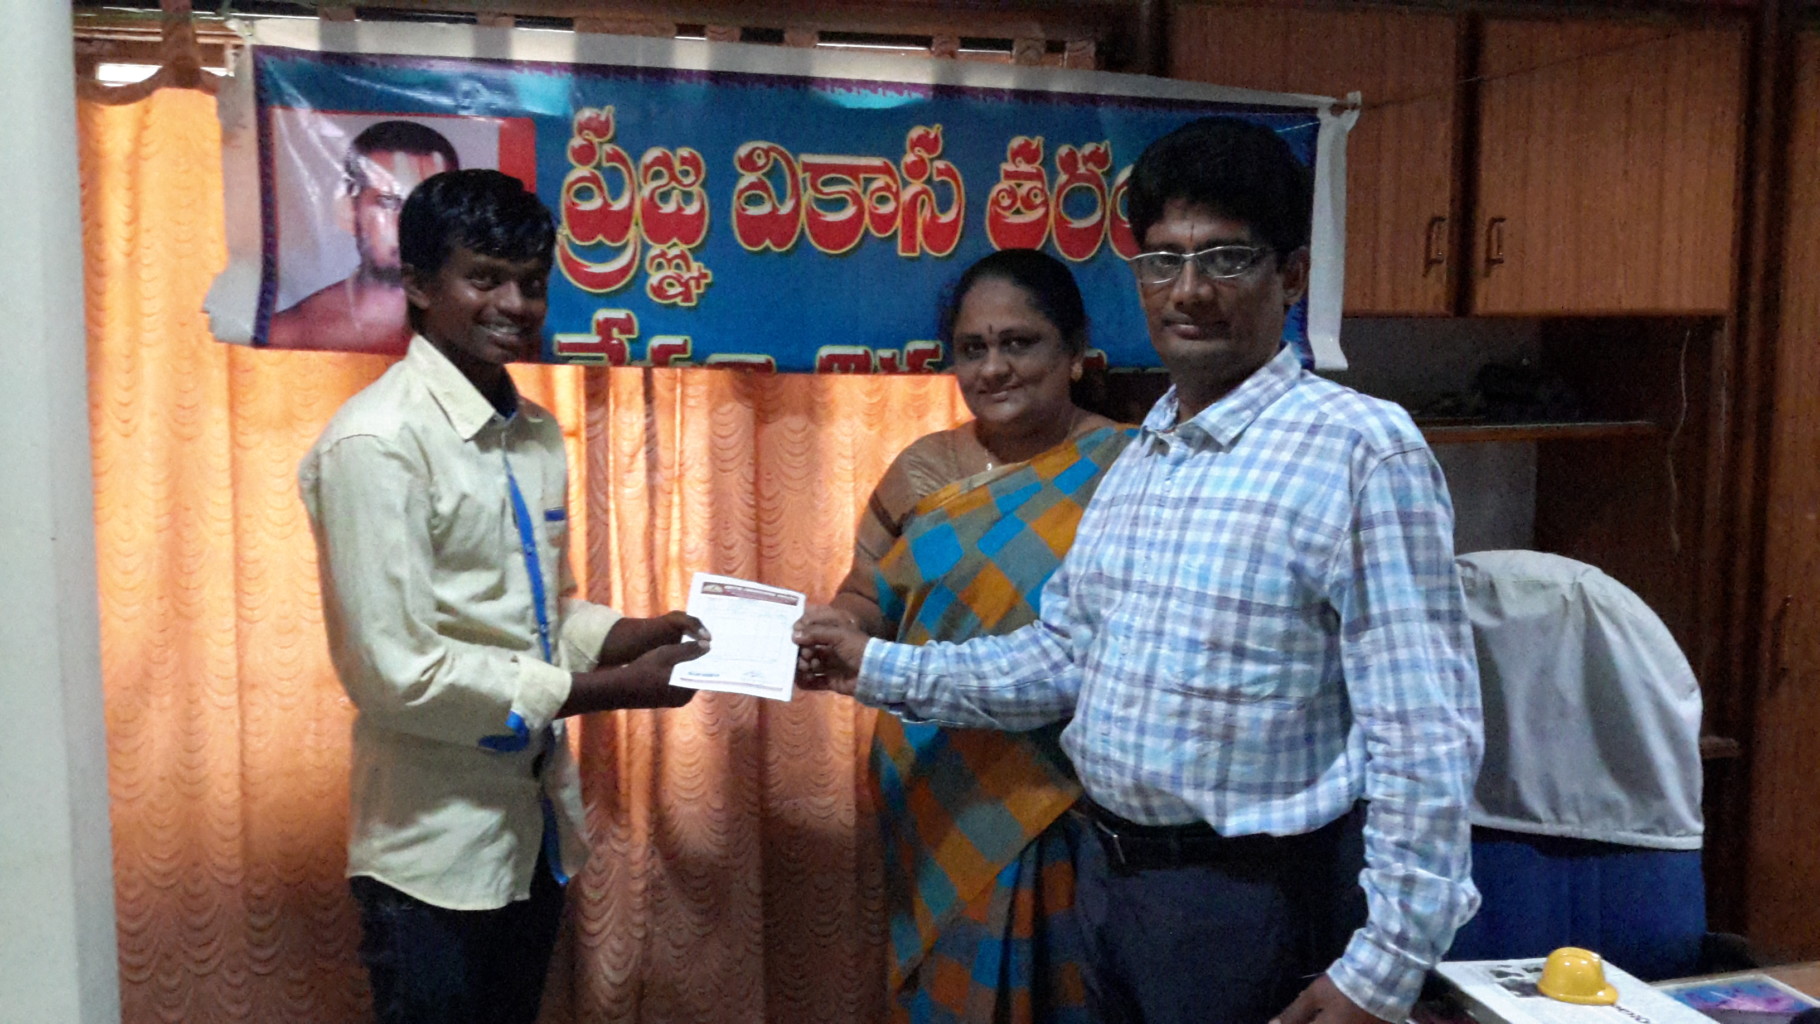 Vikasa Tarangini Rajahmundry sponsored Twenty Thousand Rupees to diploma student